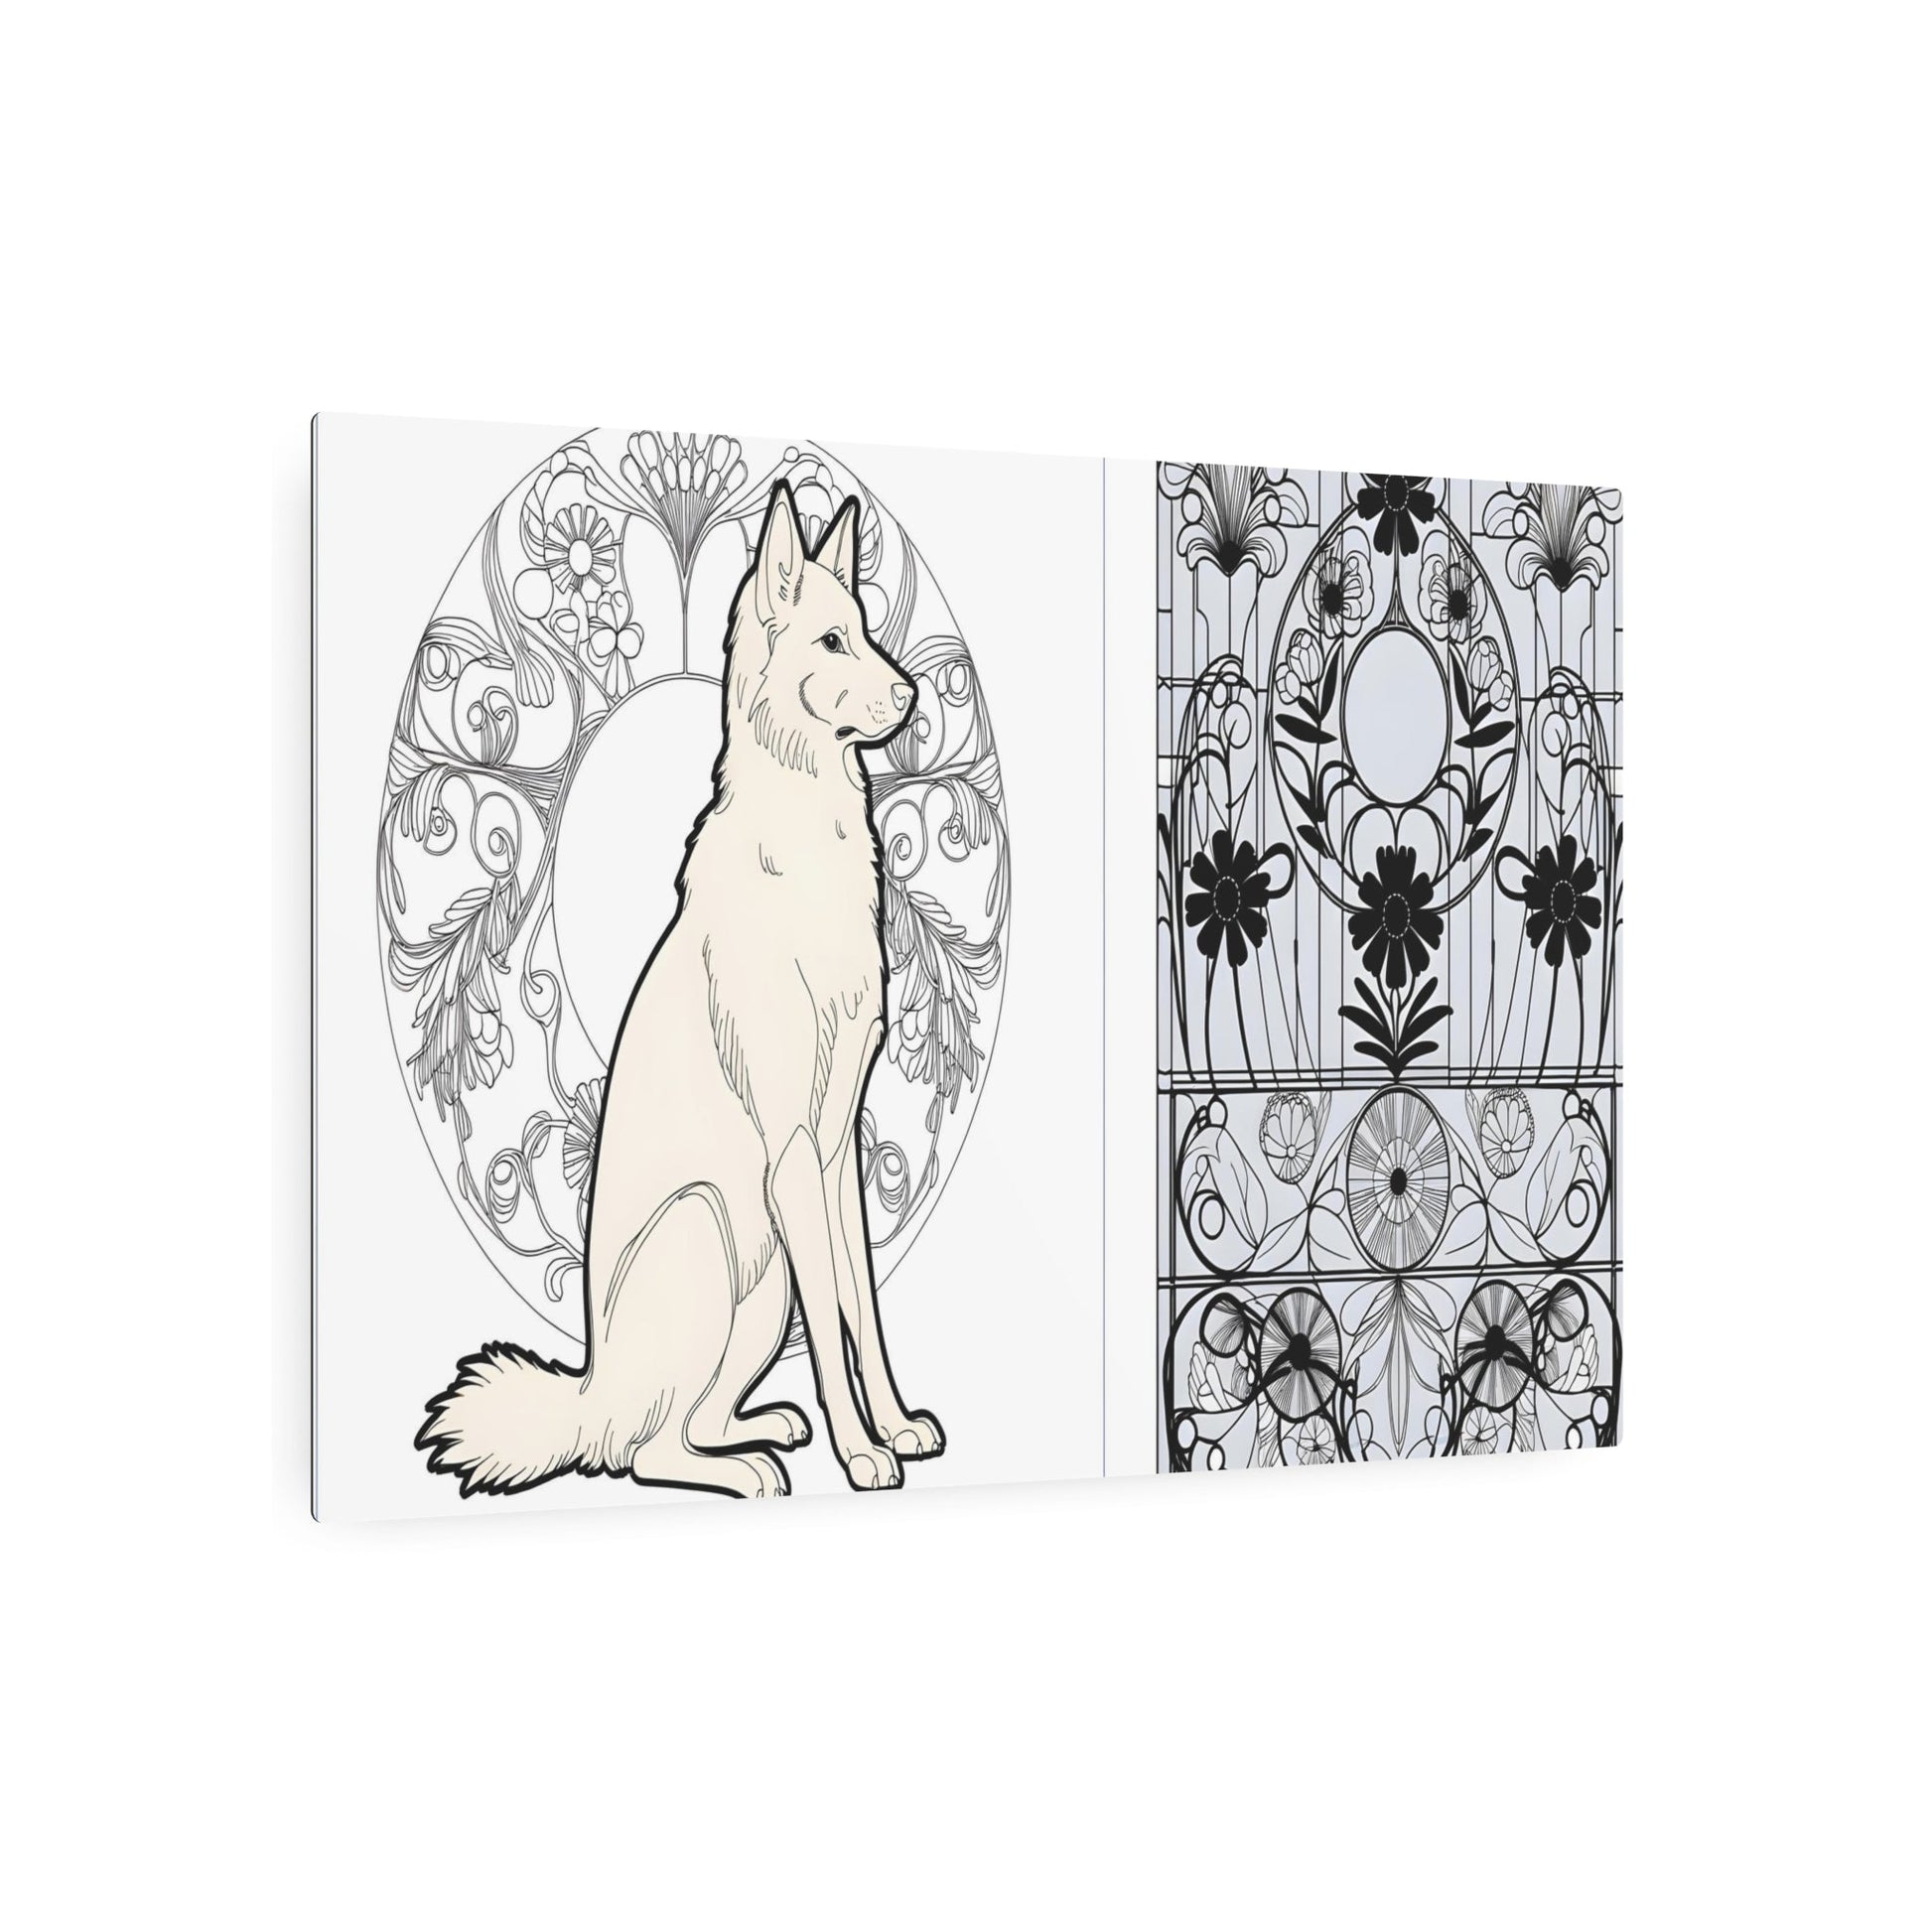 Metal Poster Art | "Art Nouveau Inspired Dog Illustration with Elegant Botanical Motifs - Late 19th & Early 20th Century Western Art Styles" - Metal Poster Art 36″ x 24″ (Horizontal) 0.12''